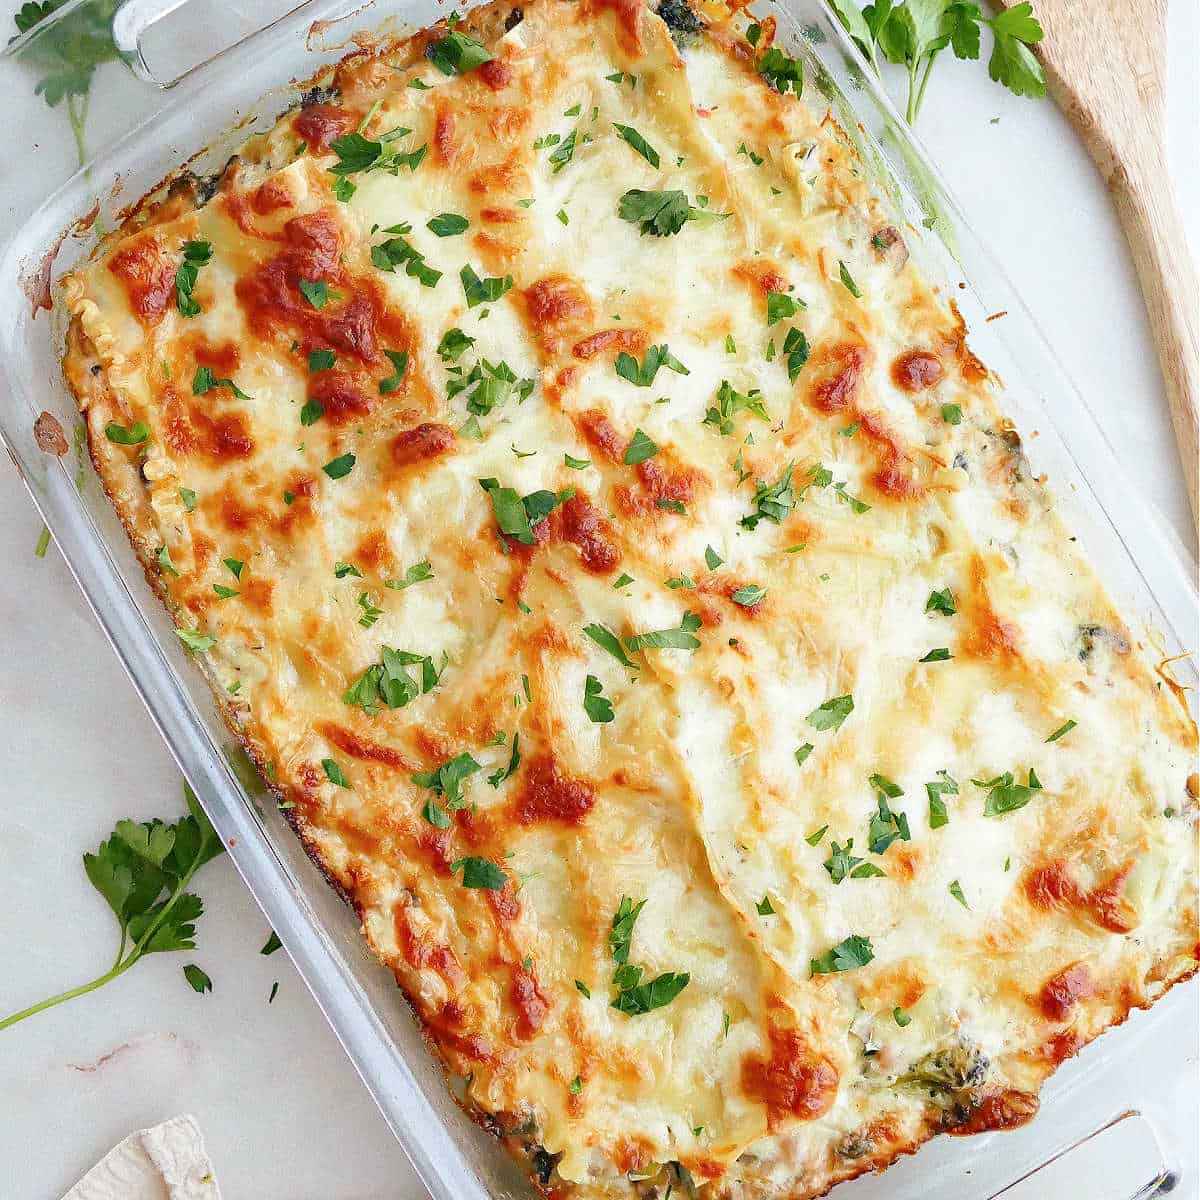 https://itsavegworldafterall.com/wp-content/uploads/2022/12/Vegetable-Lasagna-with-White-Sauce-FI.jpg